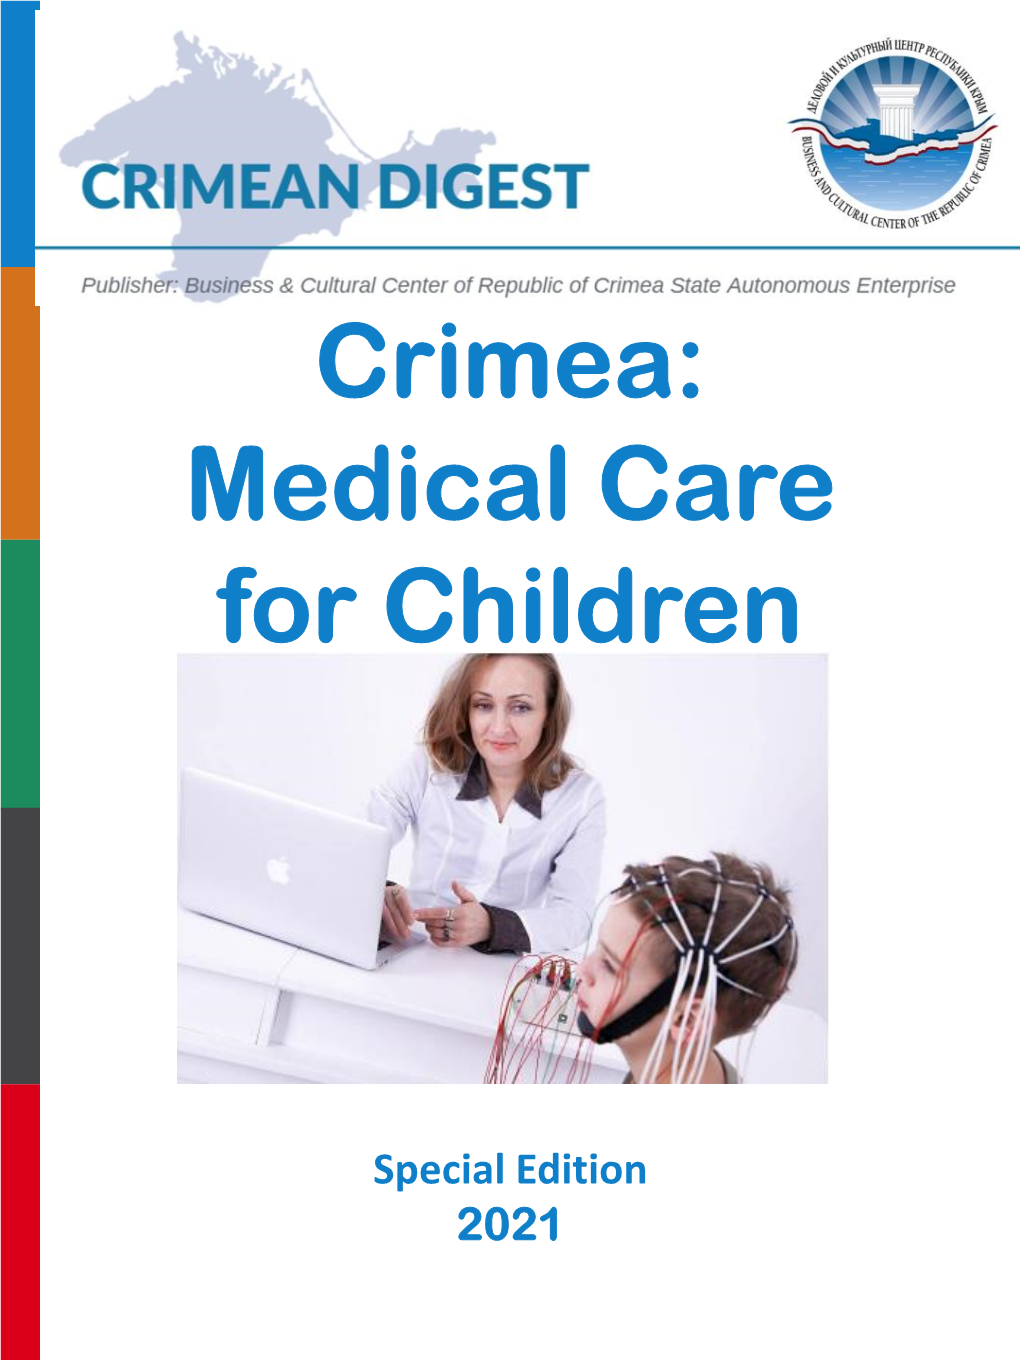 Crimean Digest